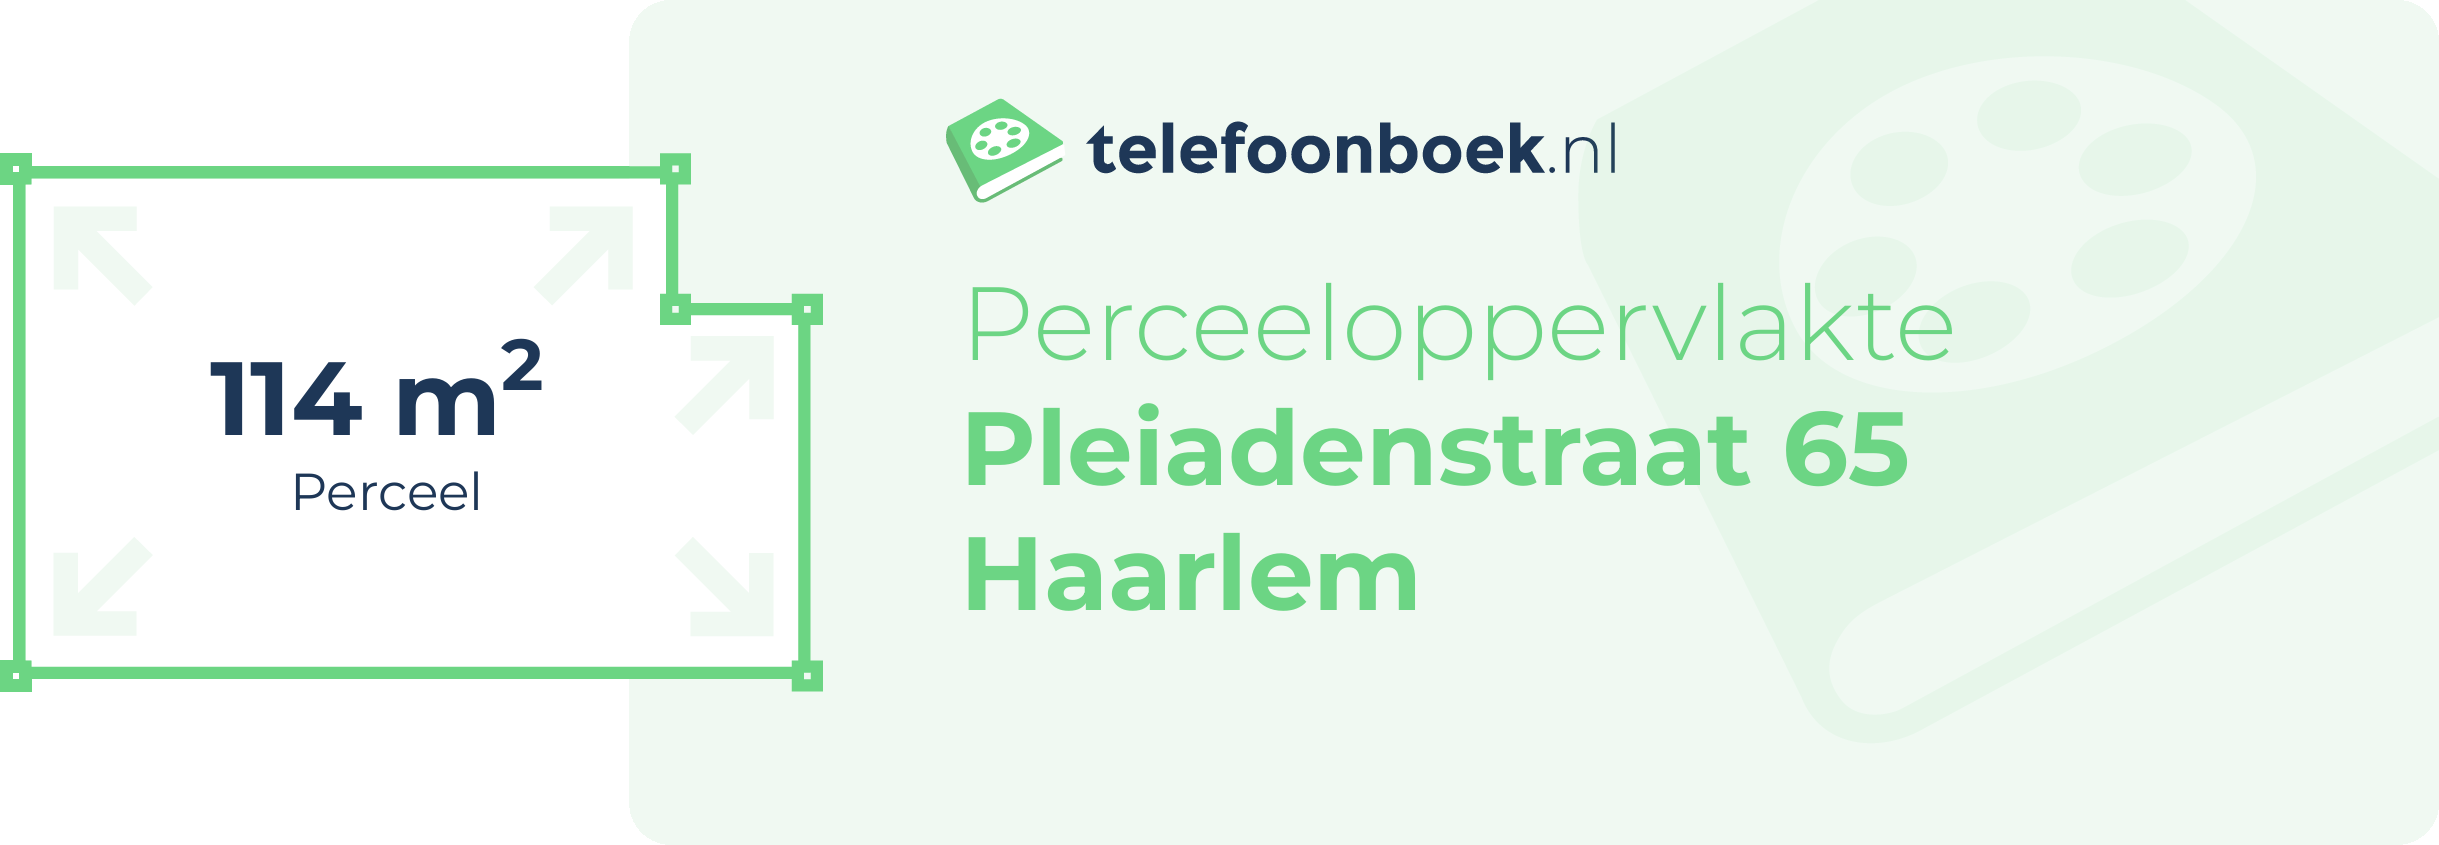 Perceeloppervlakte Pleiadenstraat 65 Haarlem